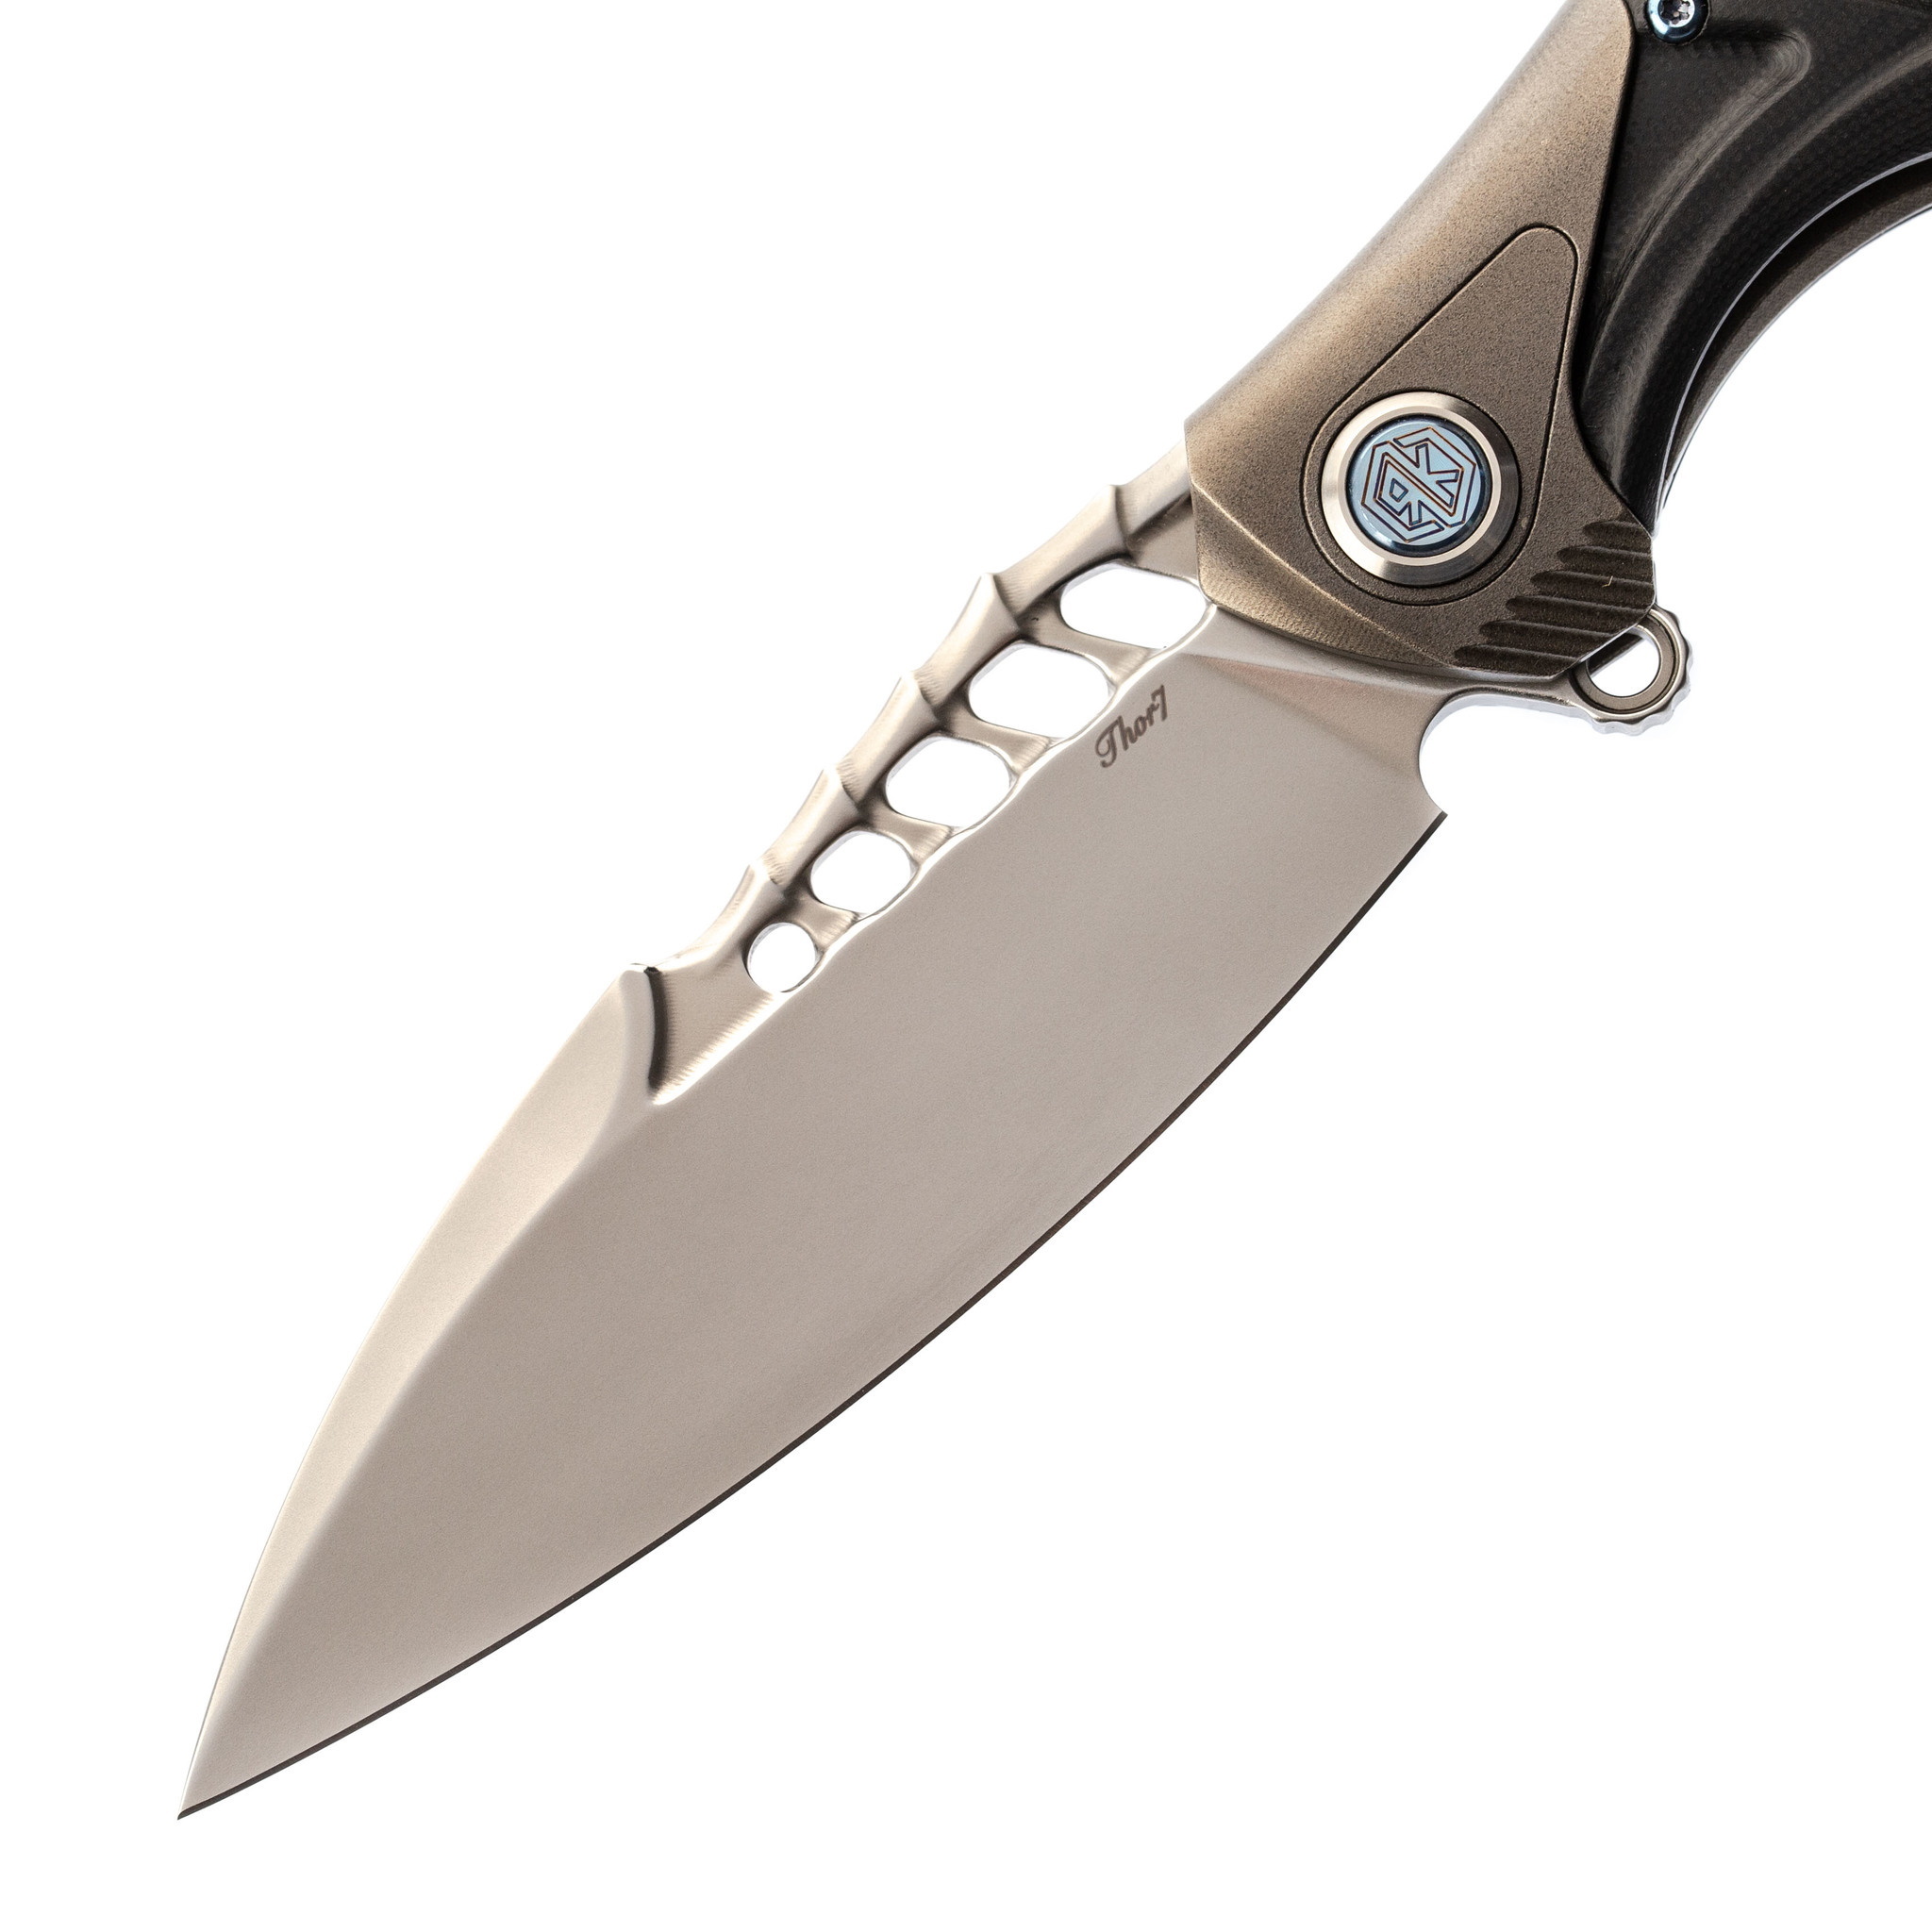 Нож складной Thor 7 Rikeknife, сталь 154CM, Black Titanium/G10 - фото 2